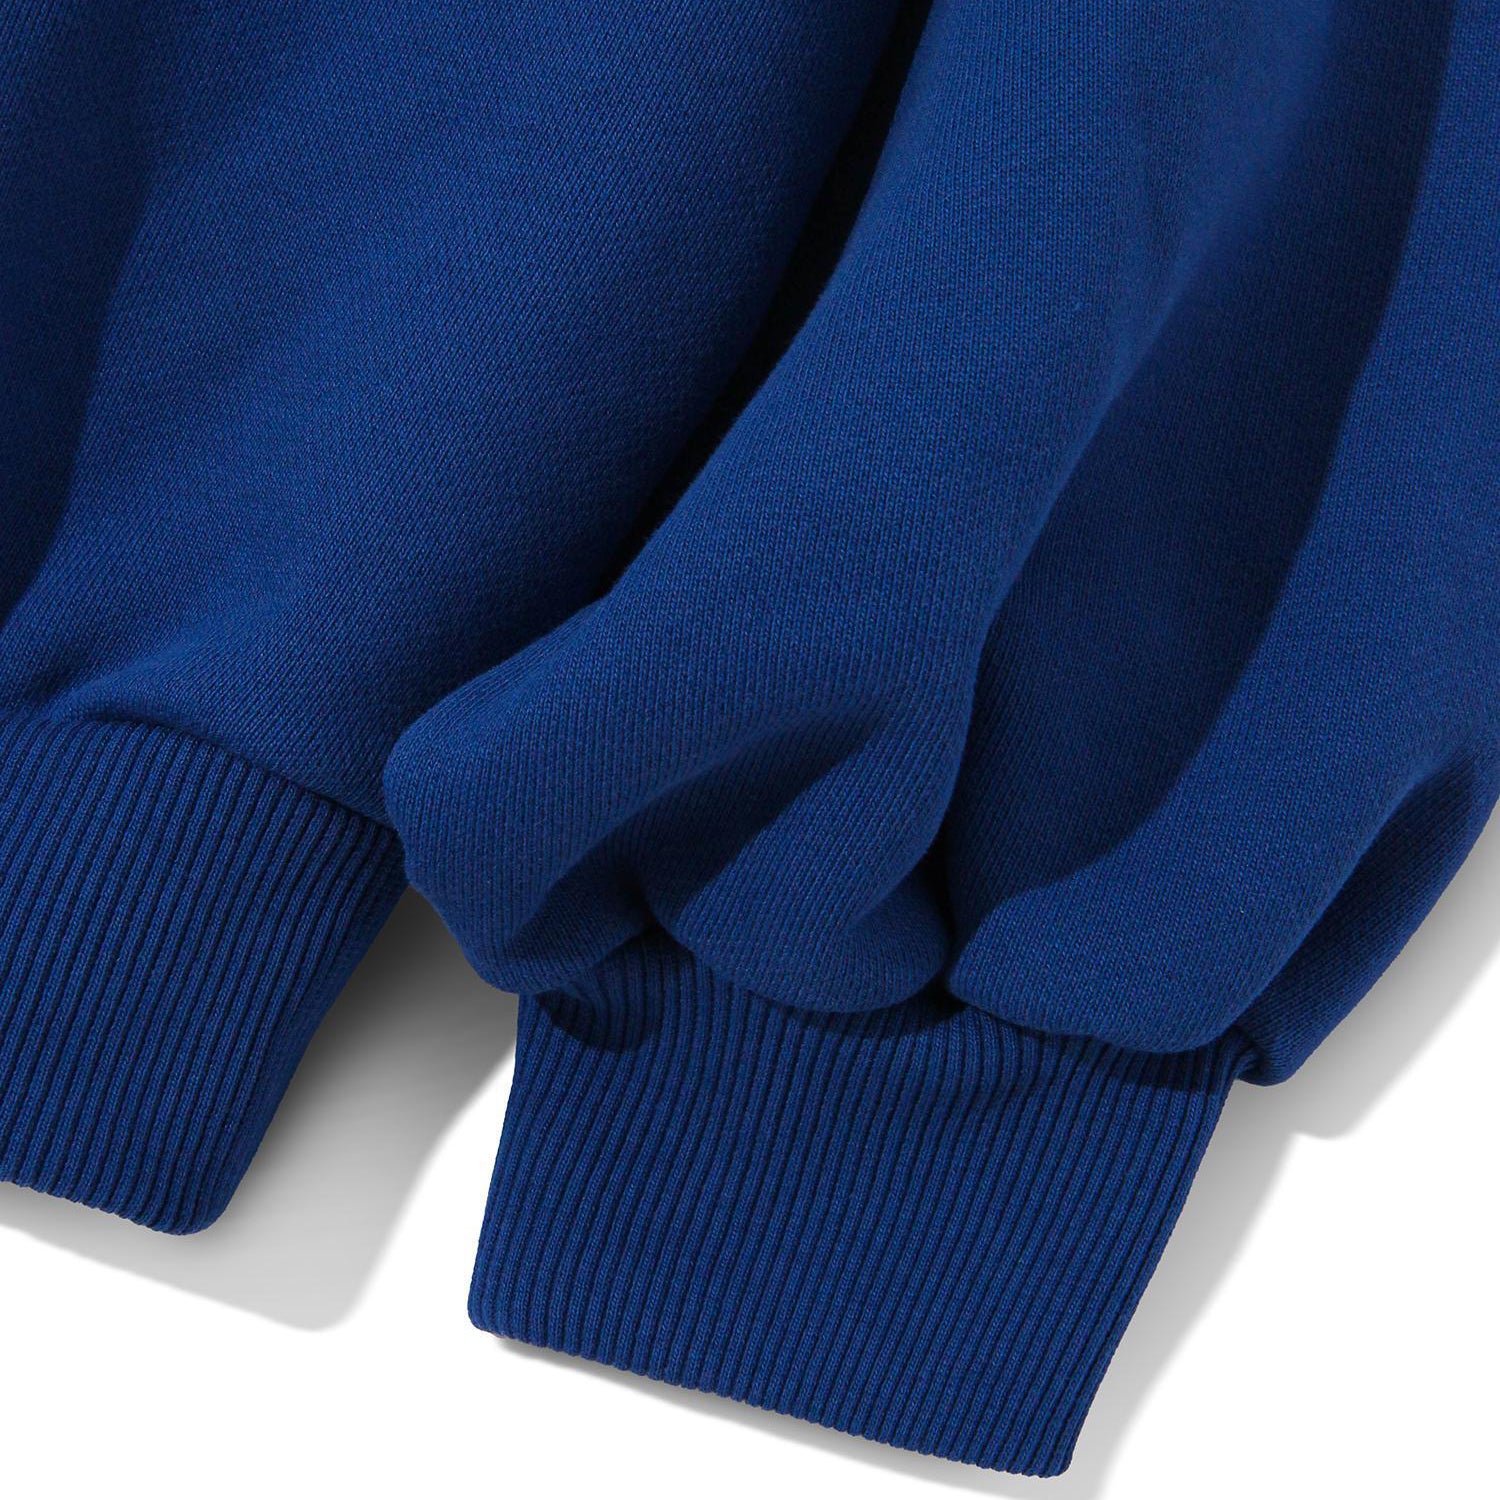 Feroce ArchロゴスウェットシャツT83-ブルー / Feroce Arch Logo Sweatshirt T83 - Blue